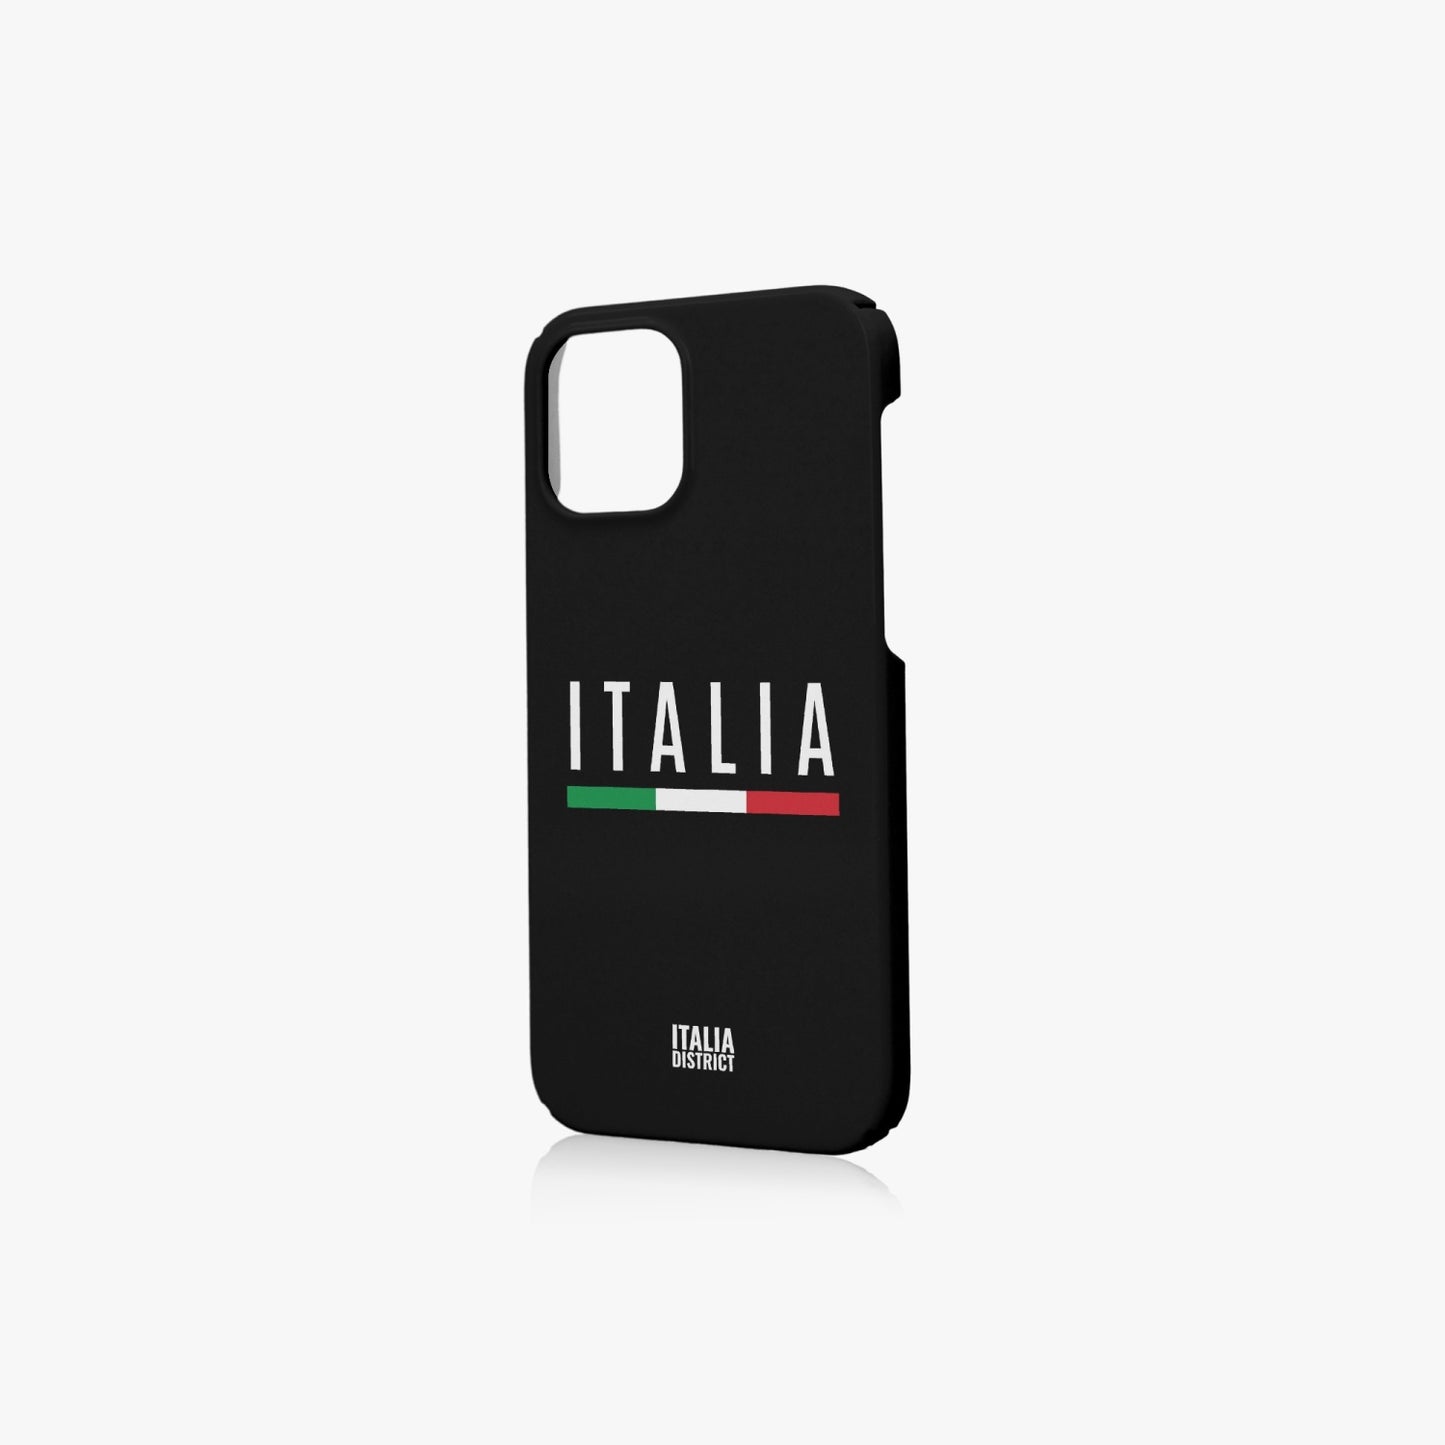 Italy Black Phone Case iPhone11